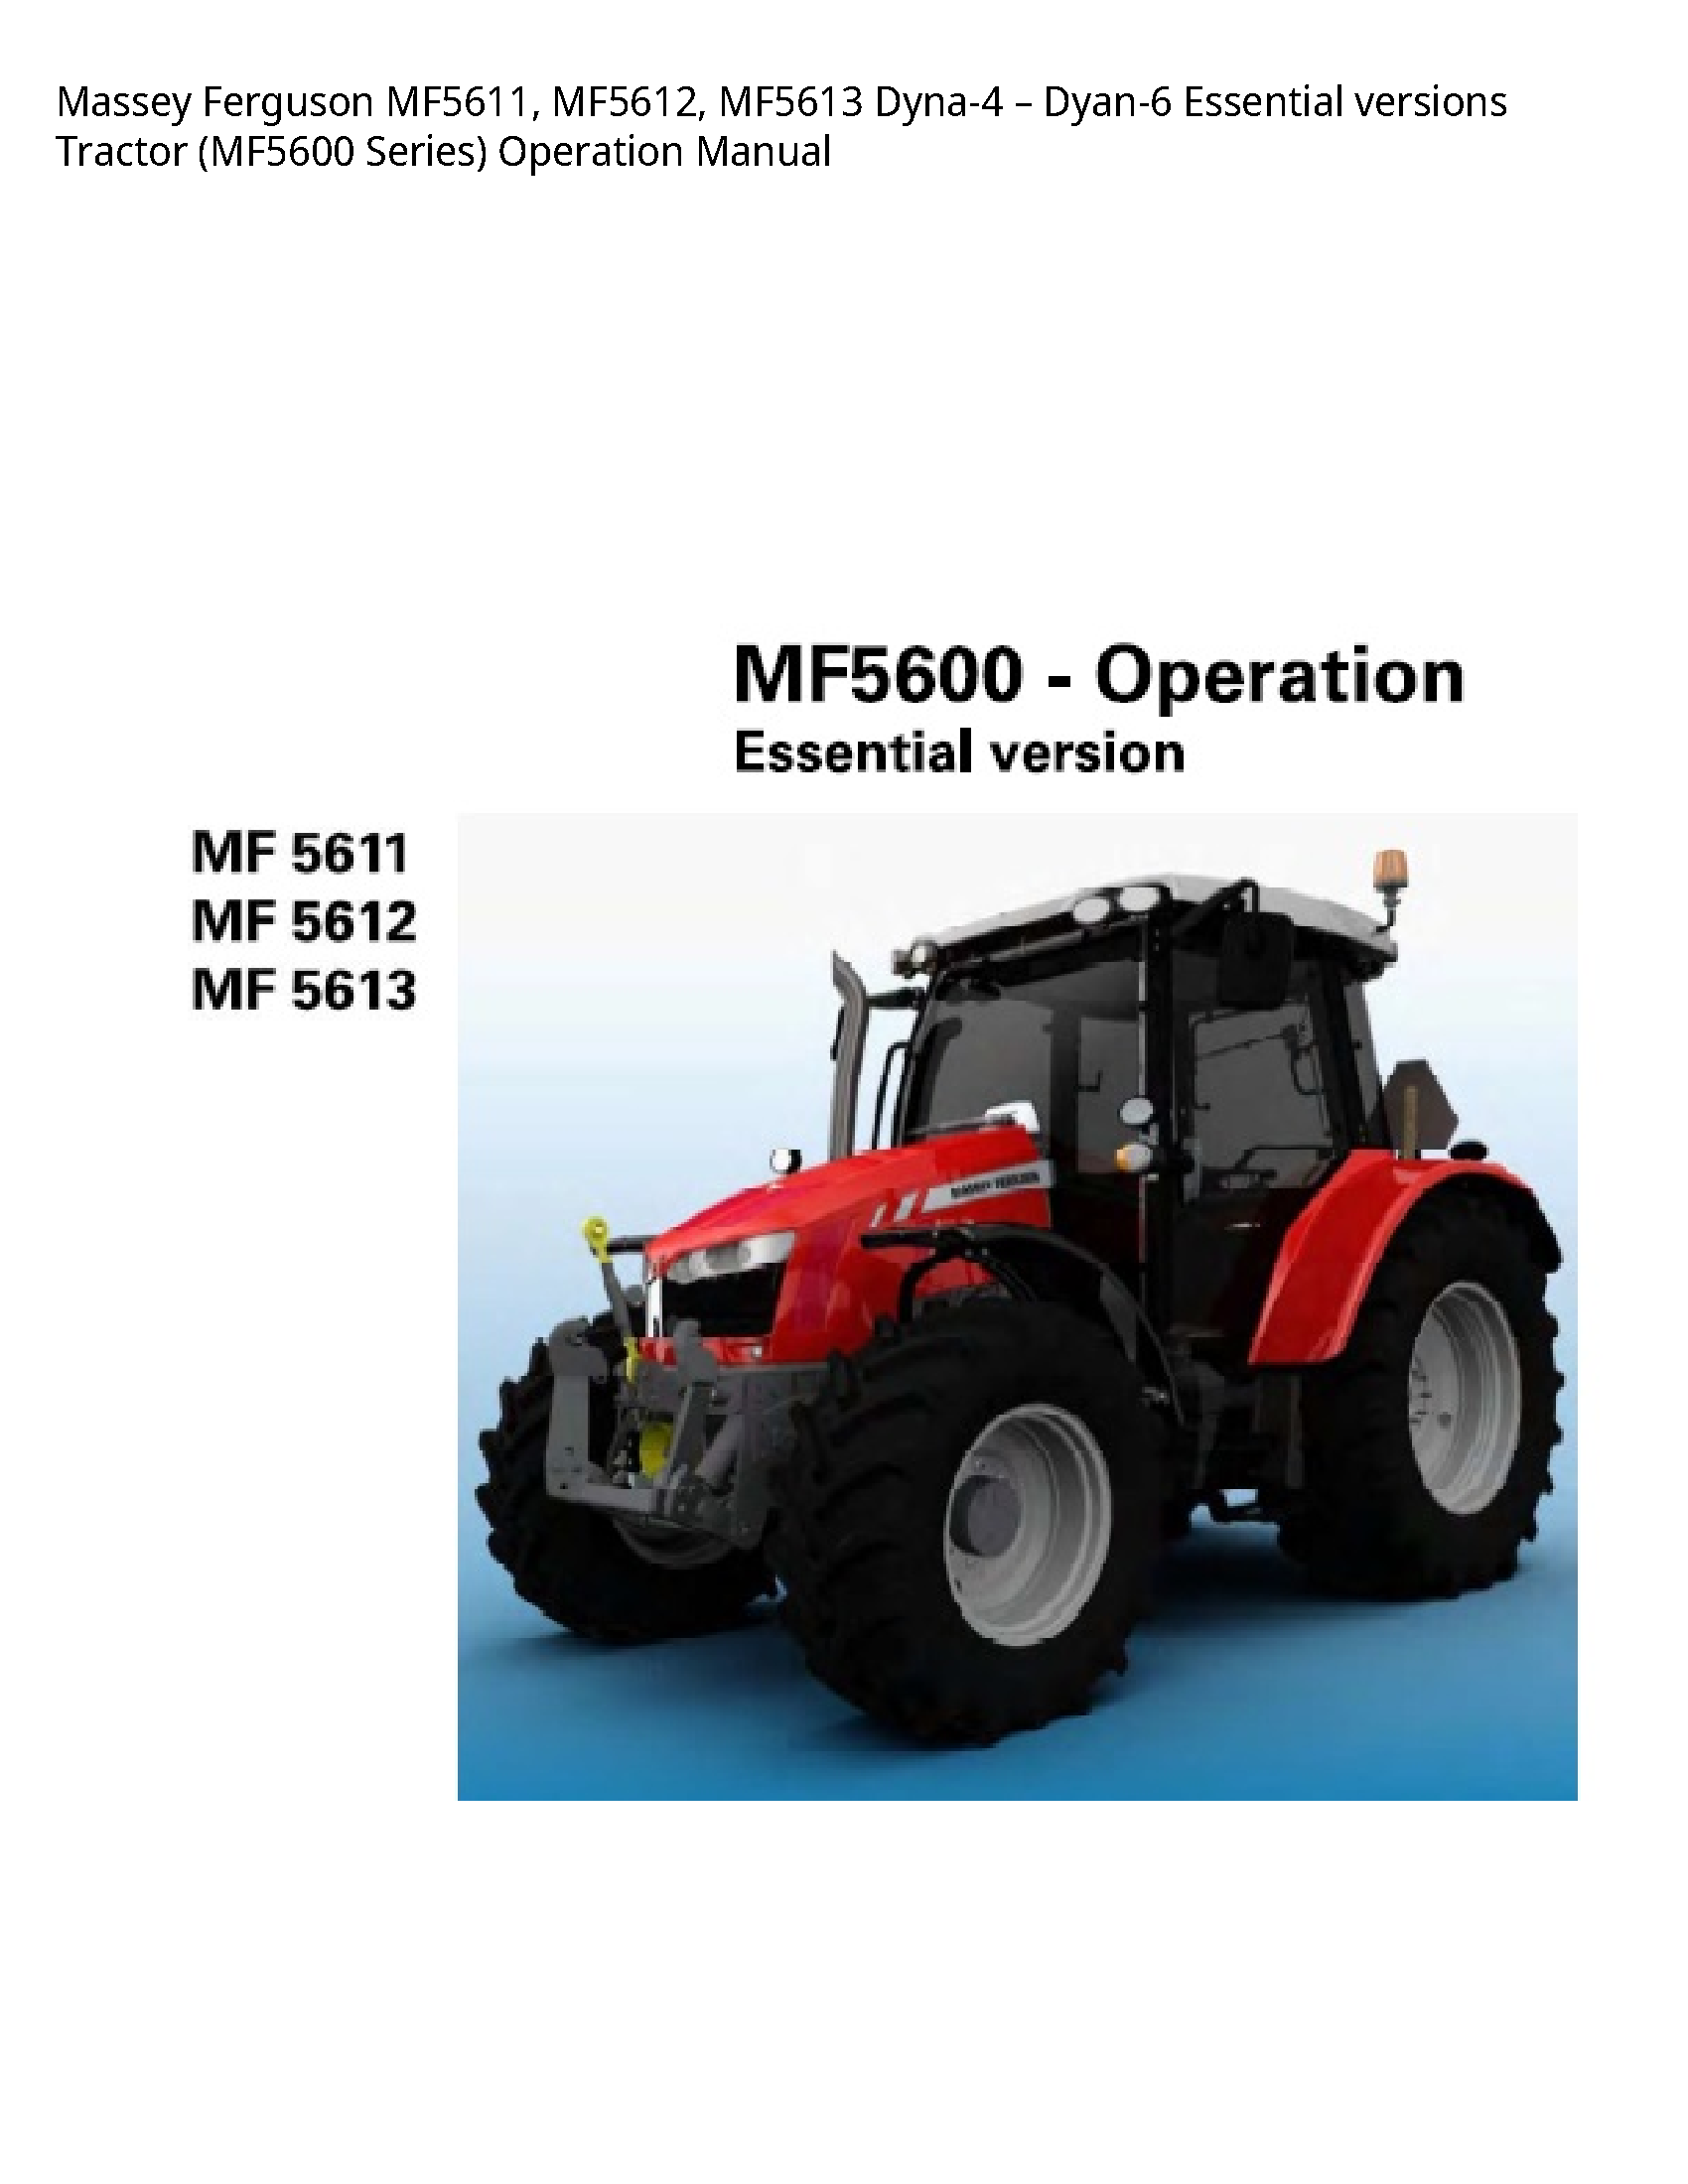 Massey Ferguson MF5611 Essential versions Tractor Series) Operation manual